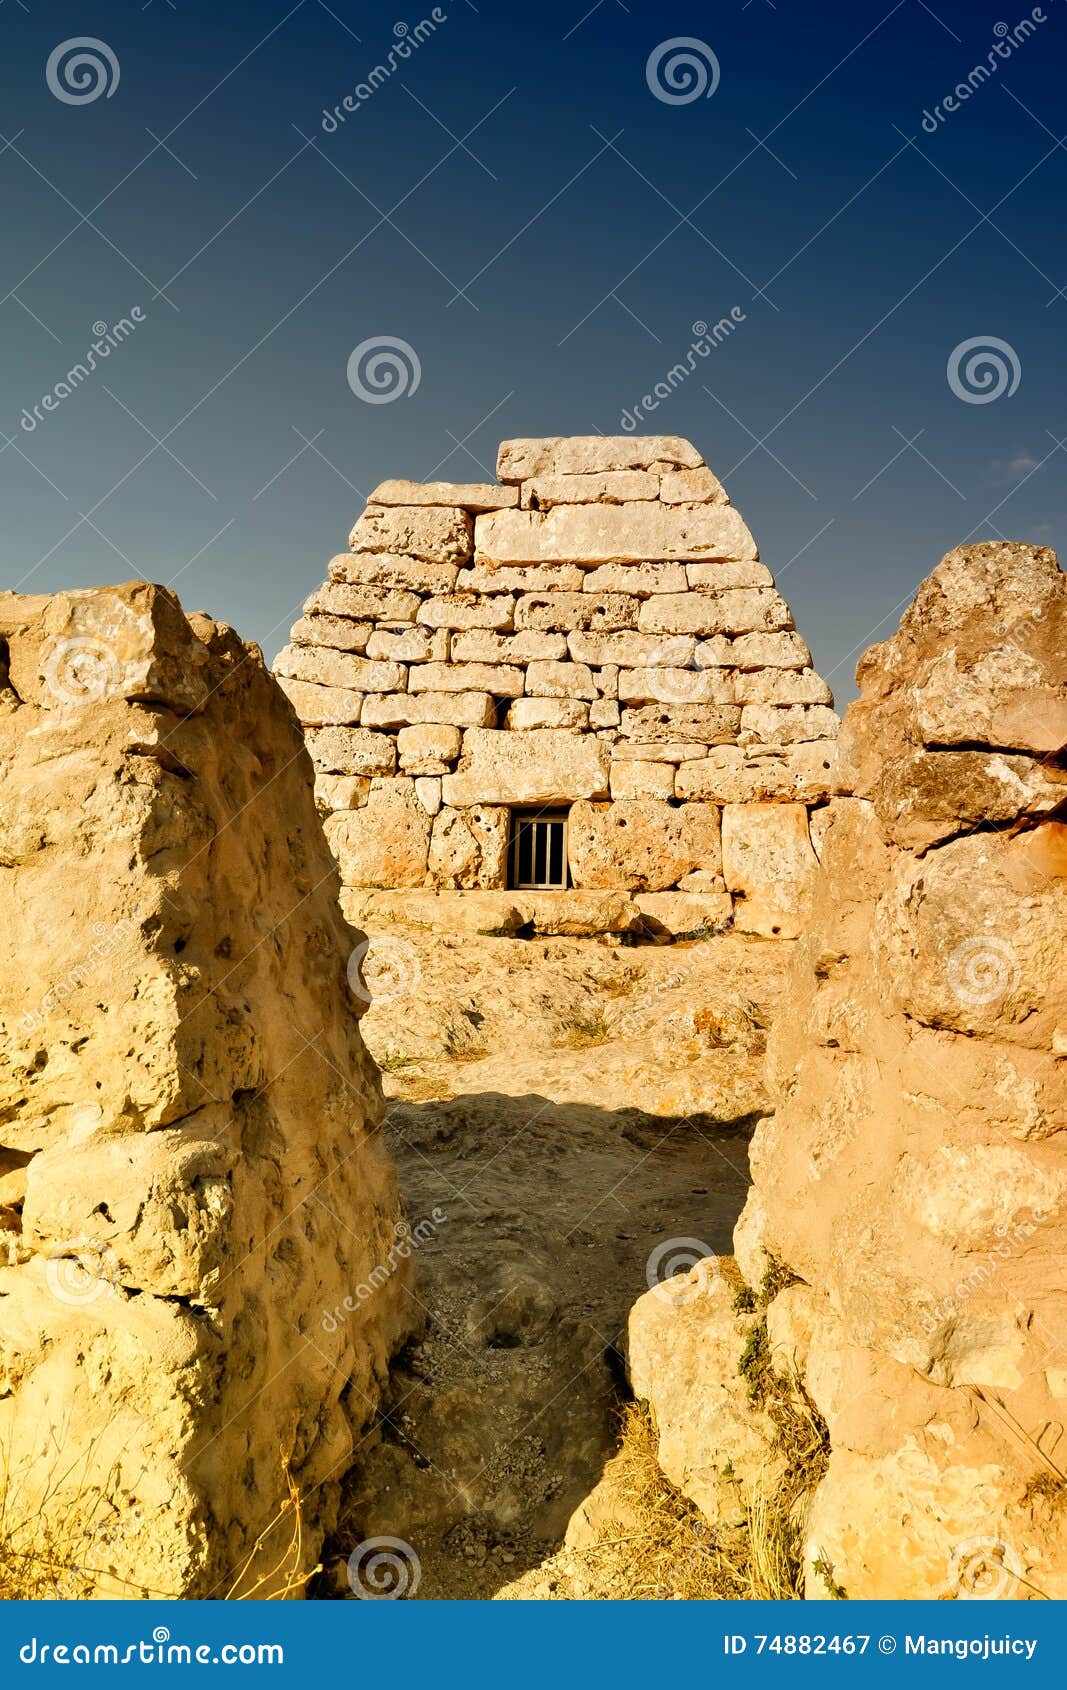 naveta des tudons - prehistoric sacral pyramid, minorca, spain